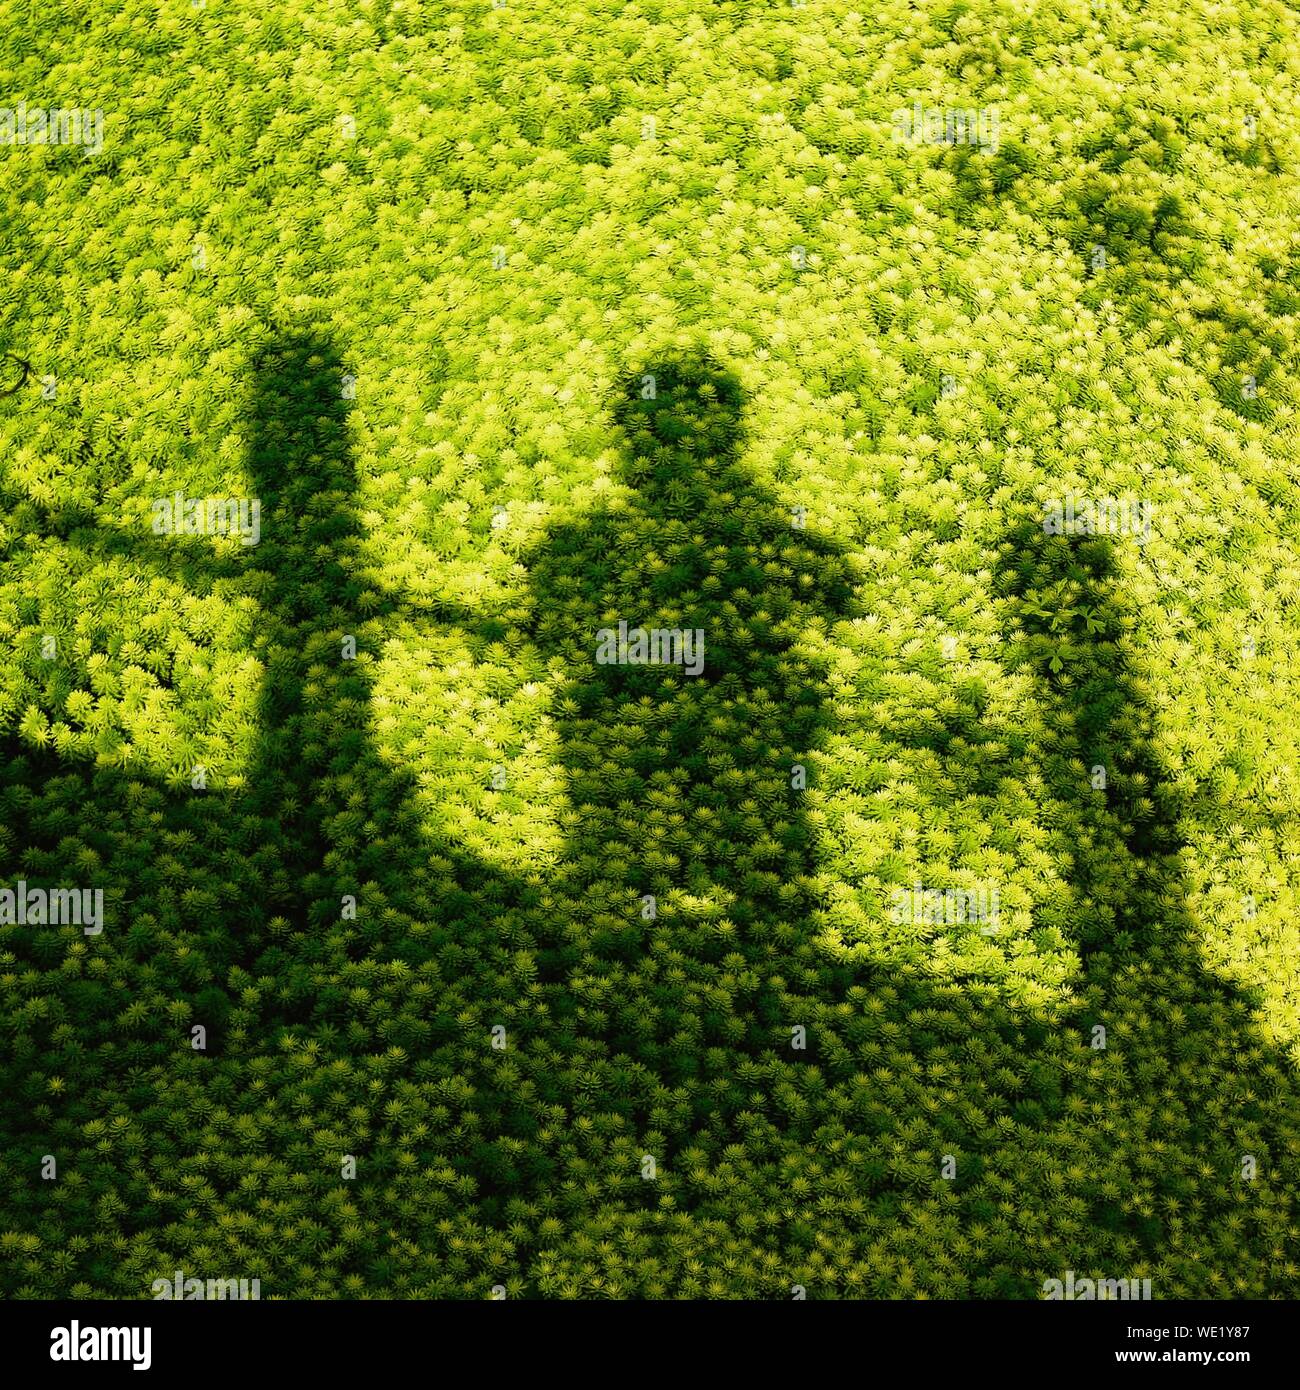 Man's Shadow On Green Duckweed Carpet Stock Photo